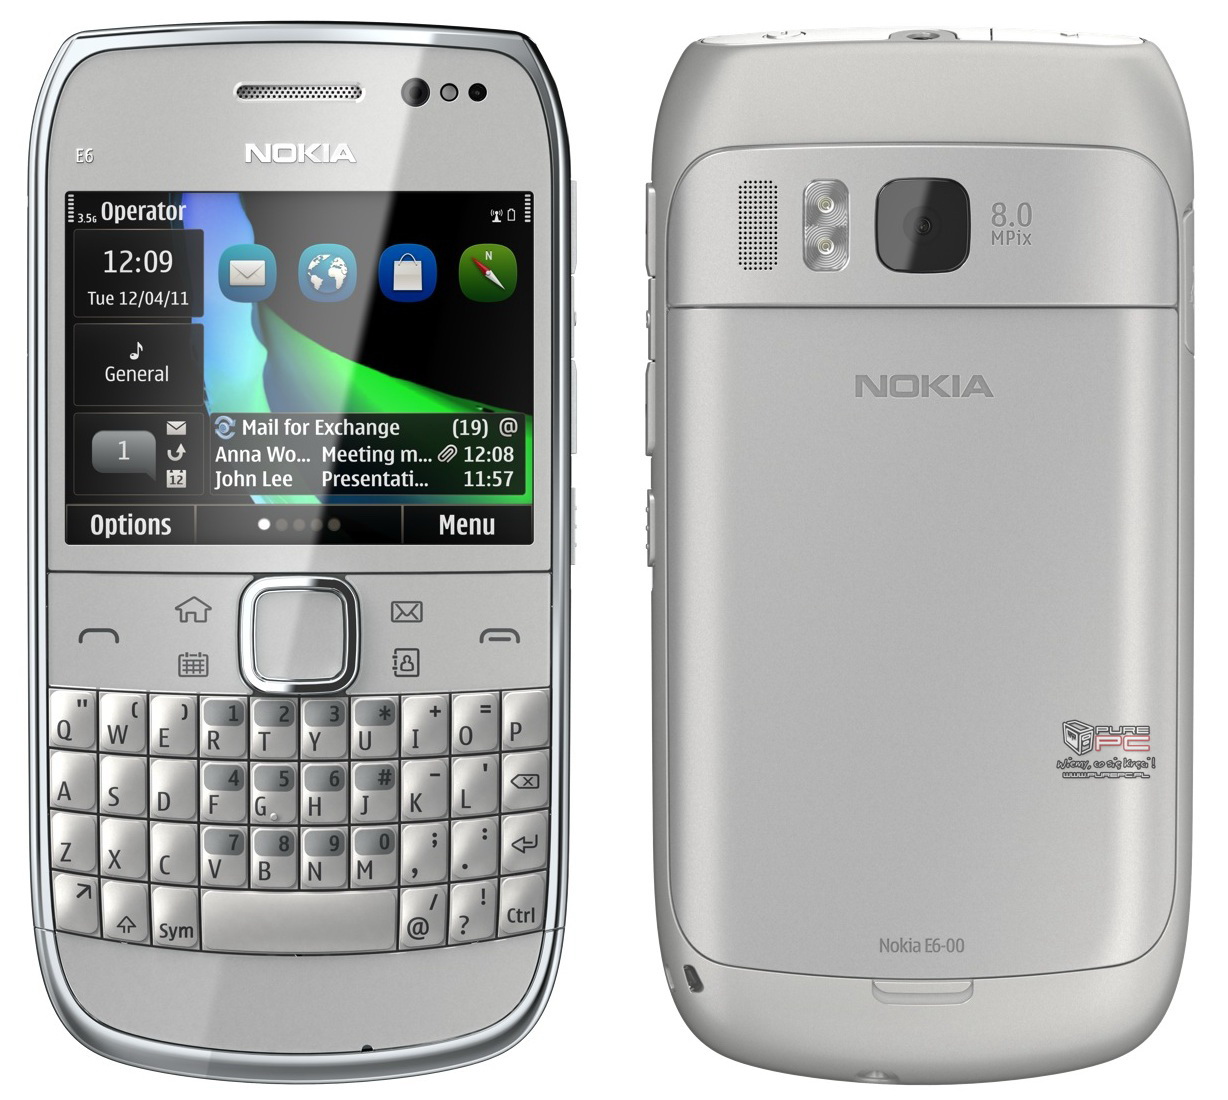 Test smartphone Nokia E6 przemyślany biznes PurePC.pl